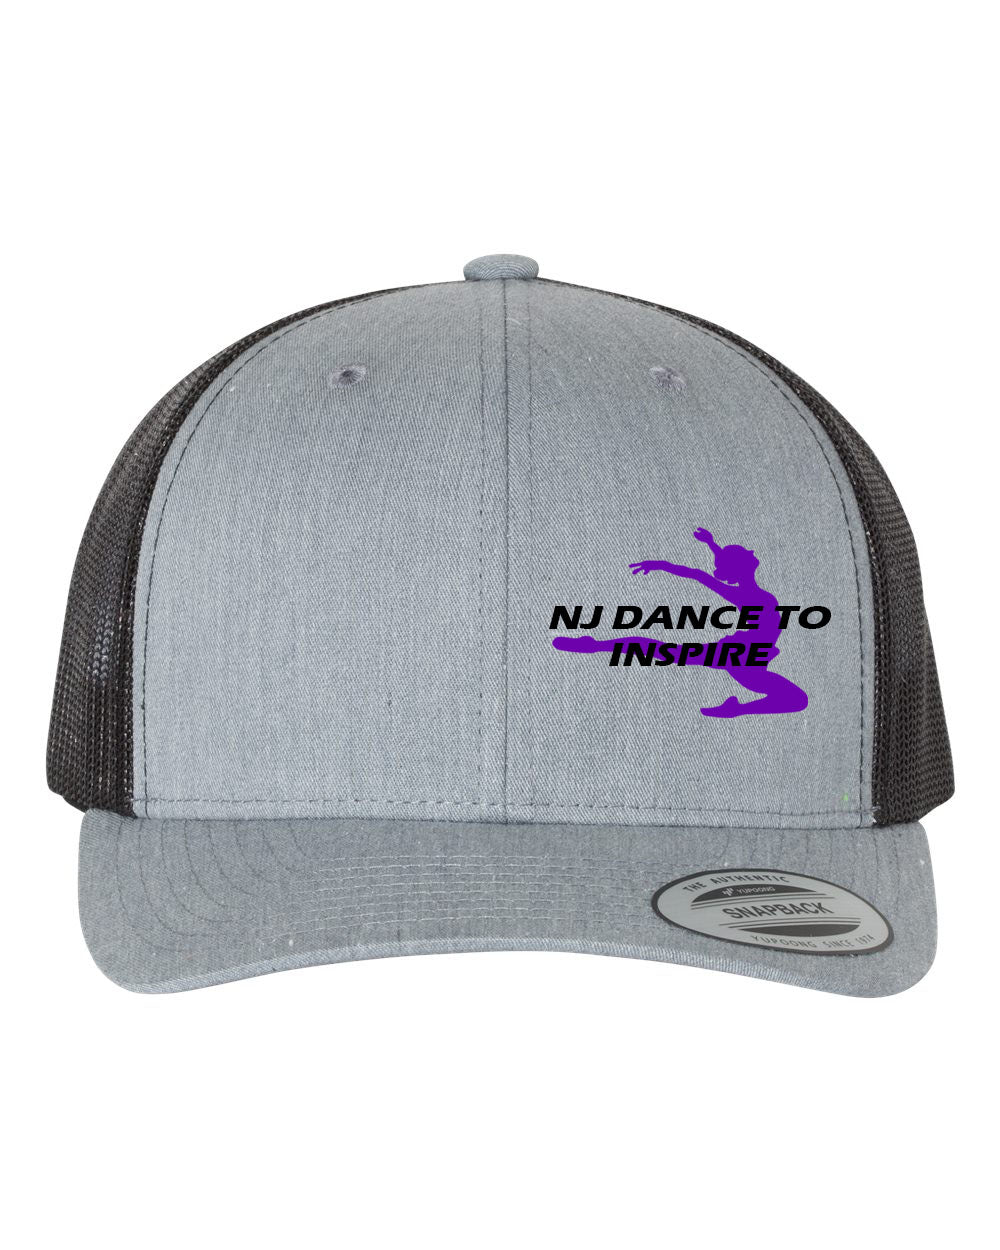 NJ Dance Design 1 Trucker Hat